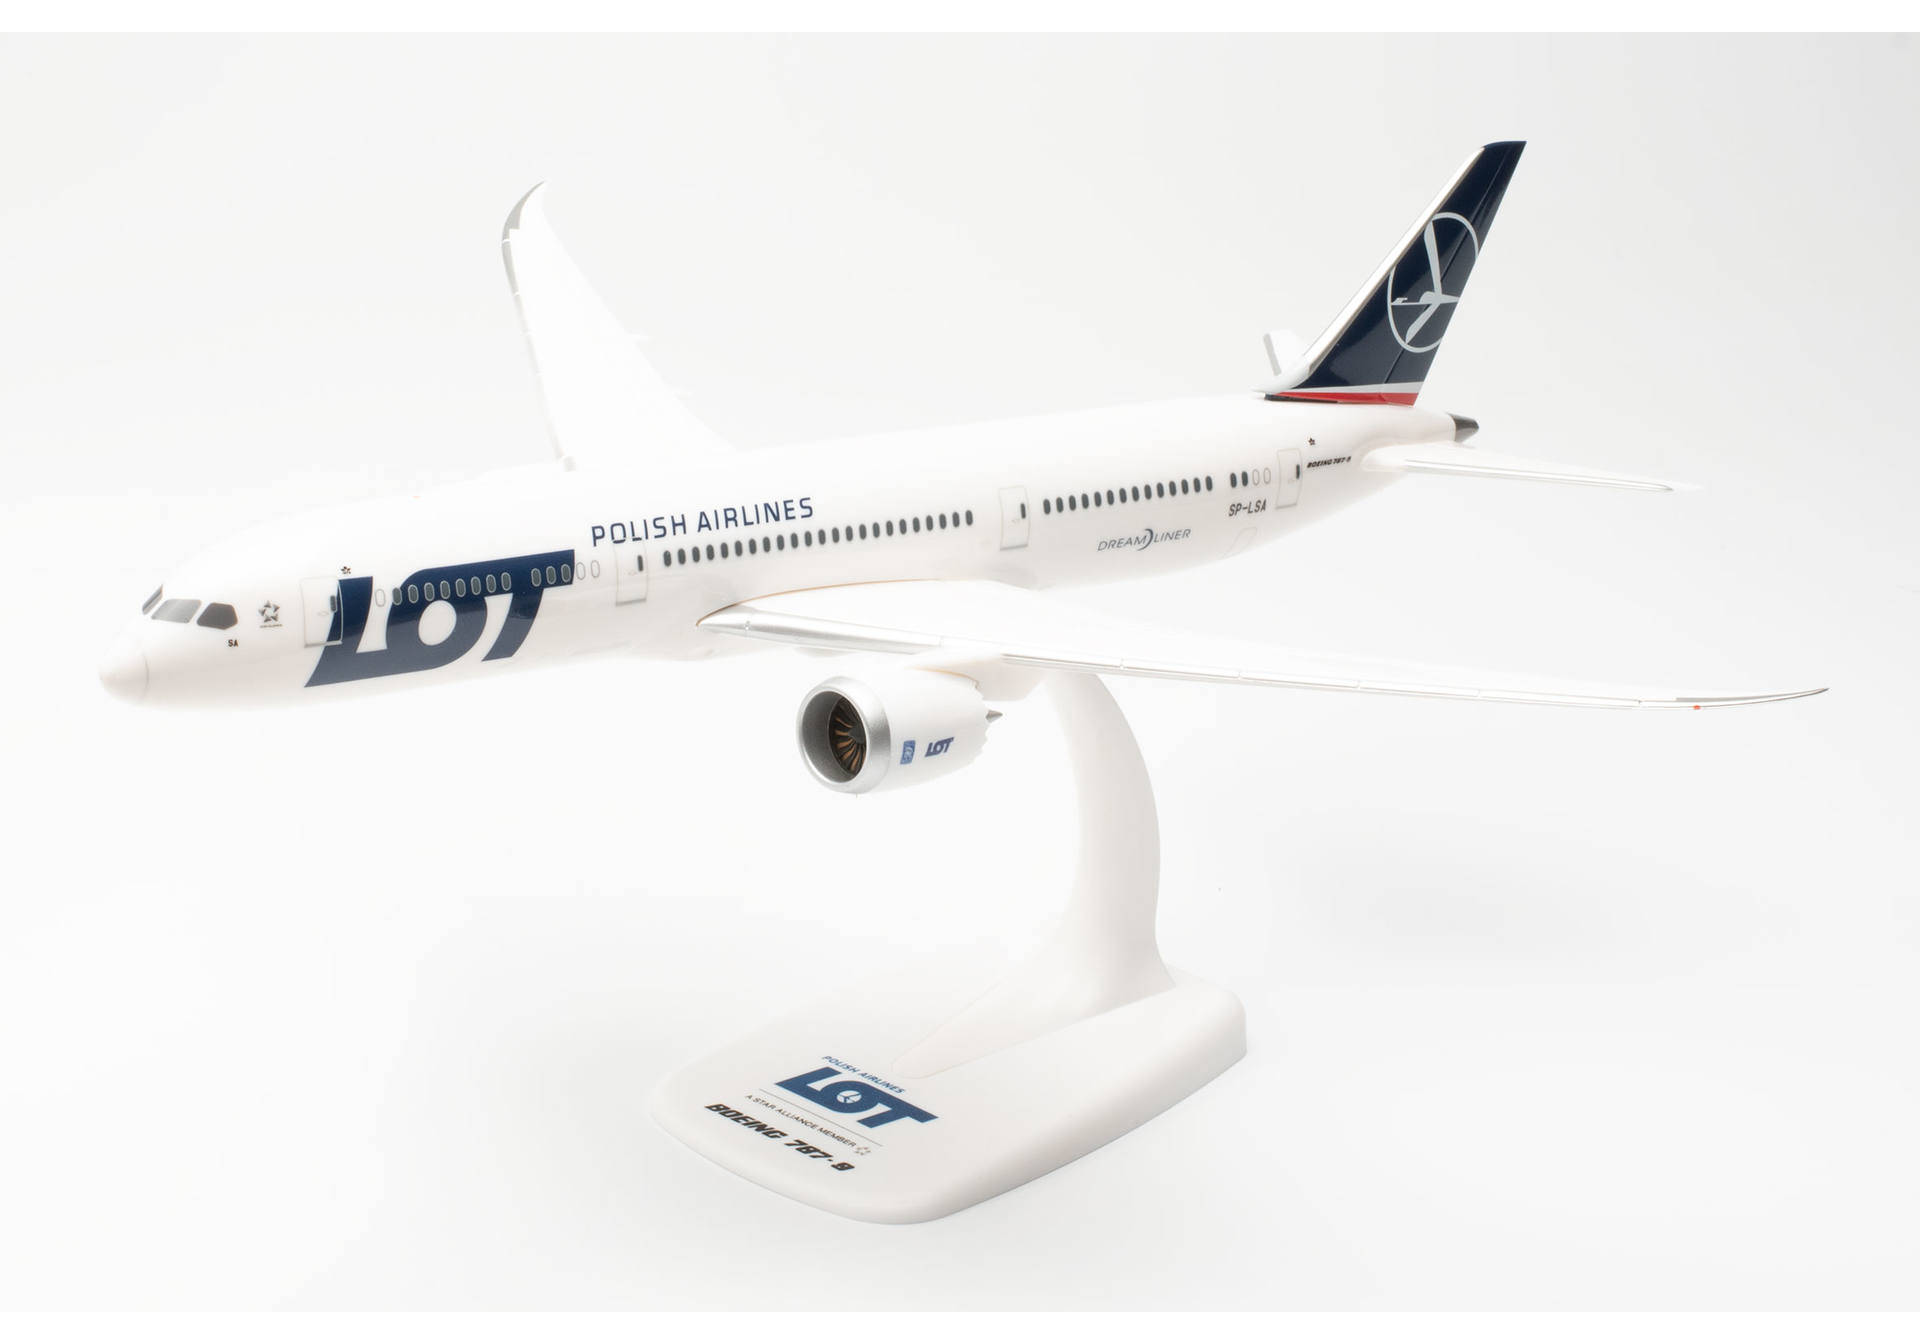 LOT Polish Airlines Boeing 787-9 Dreamliner